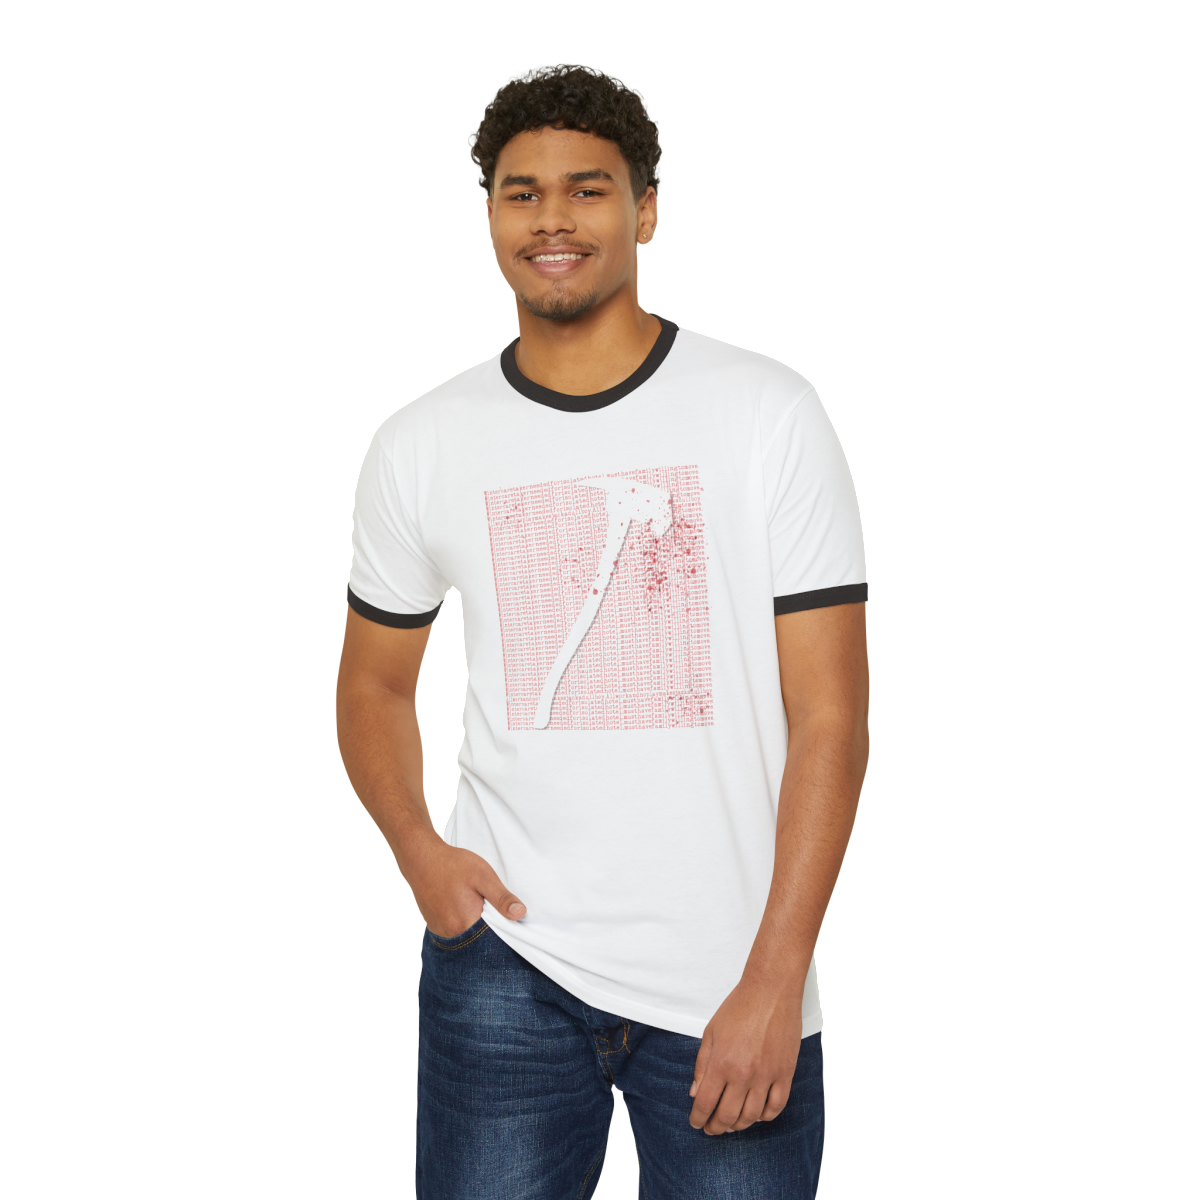 Axe (light shirts) - Unisex Cotton Ringer T-Shirt